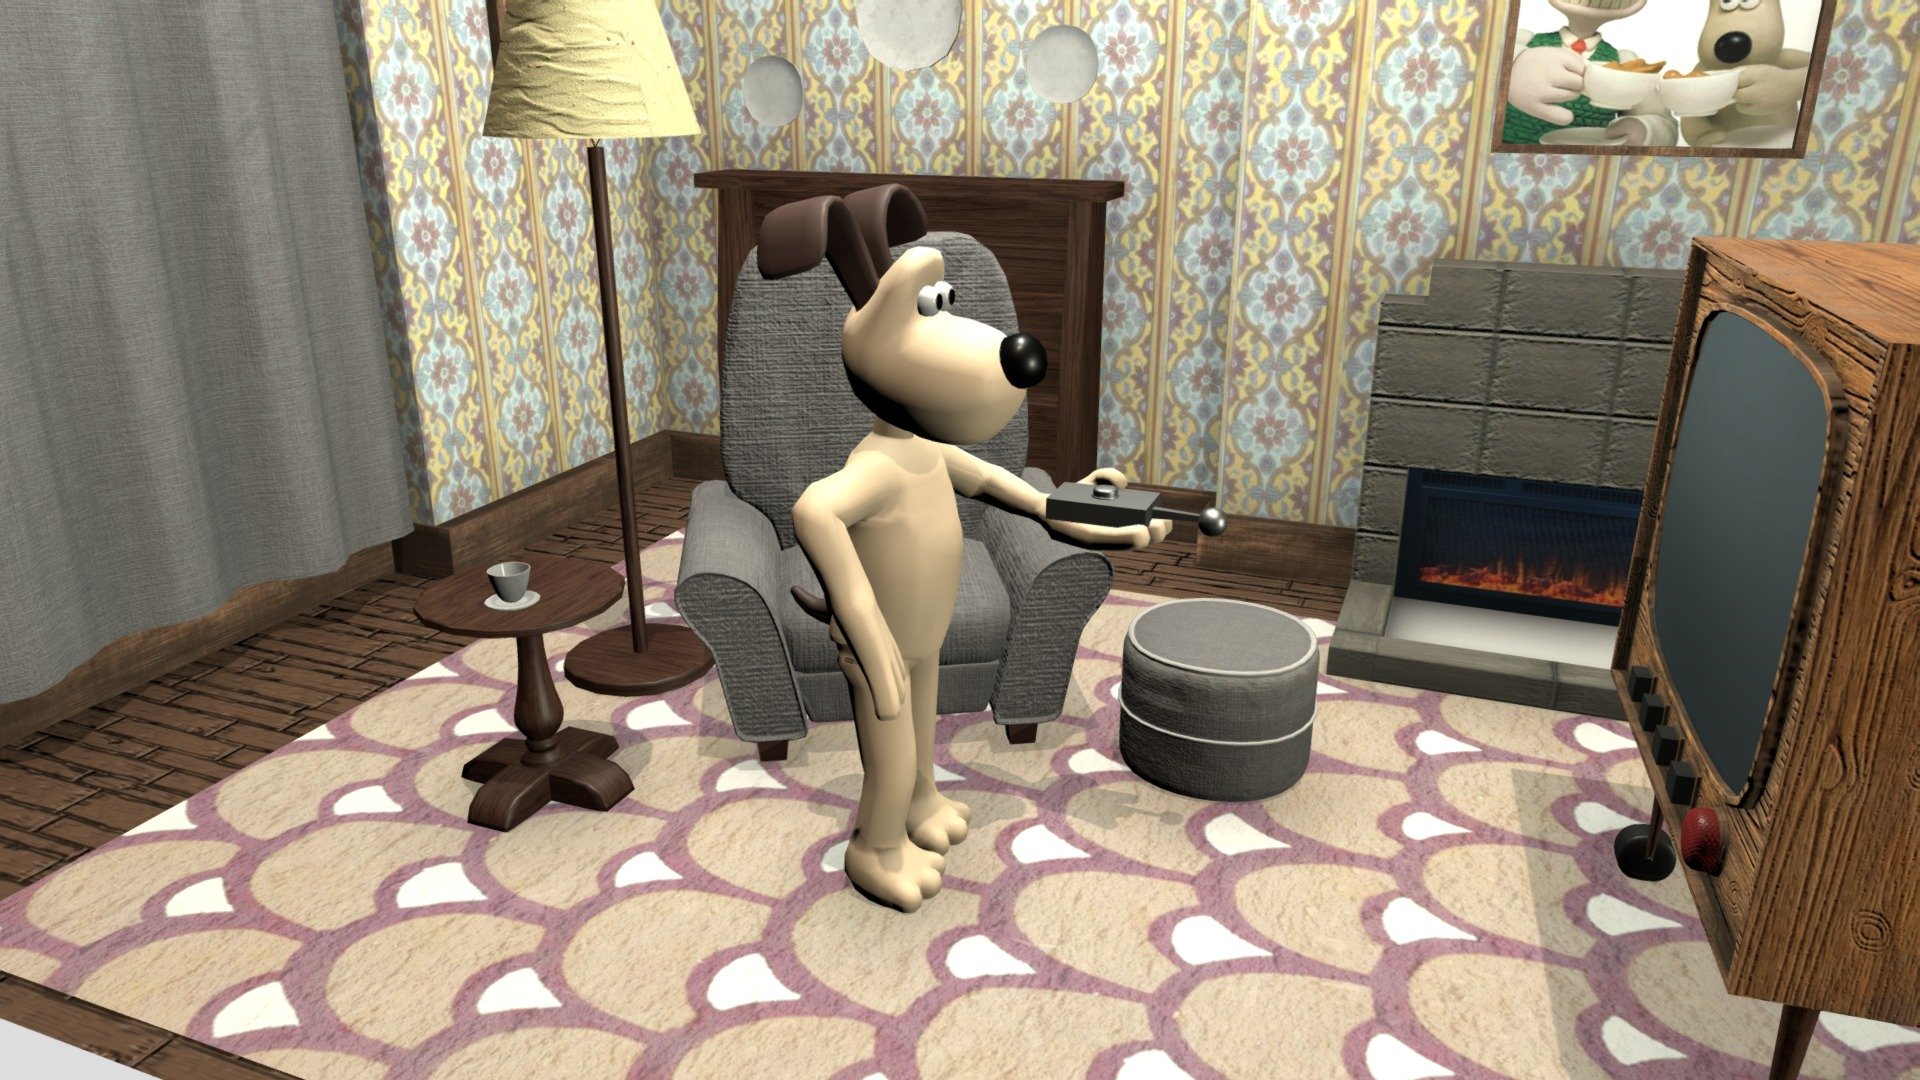 Gromit - Living Room